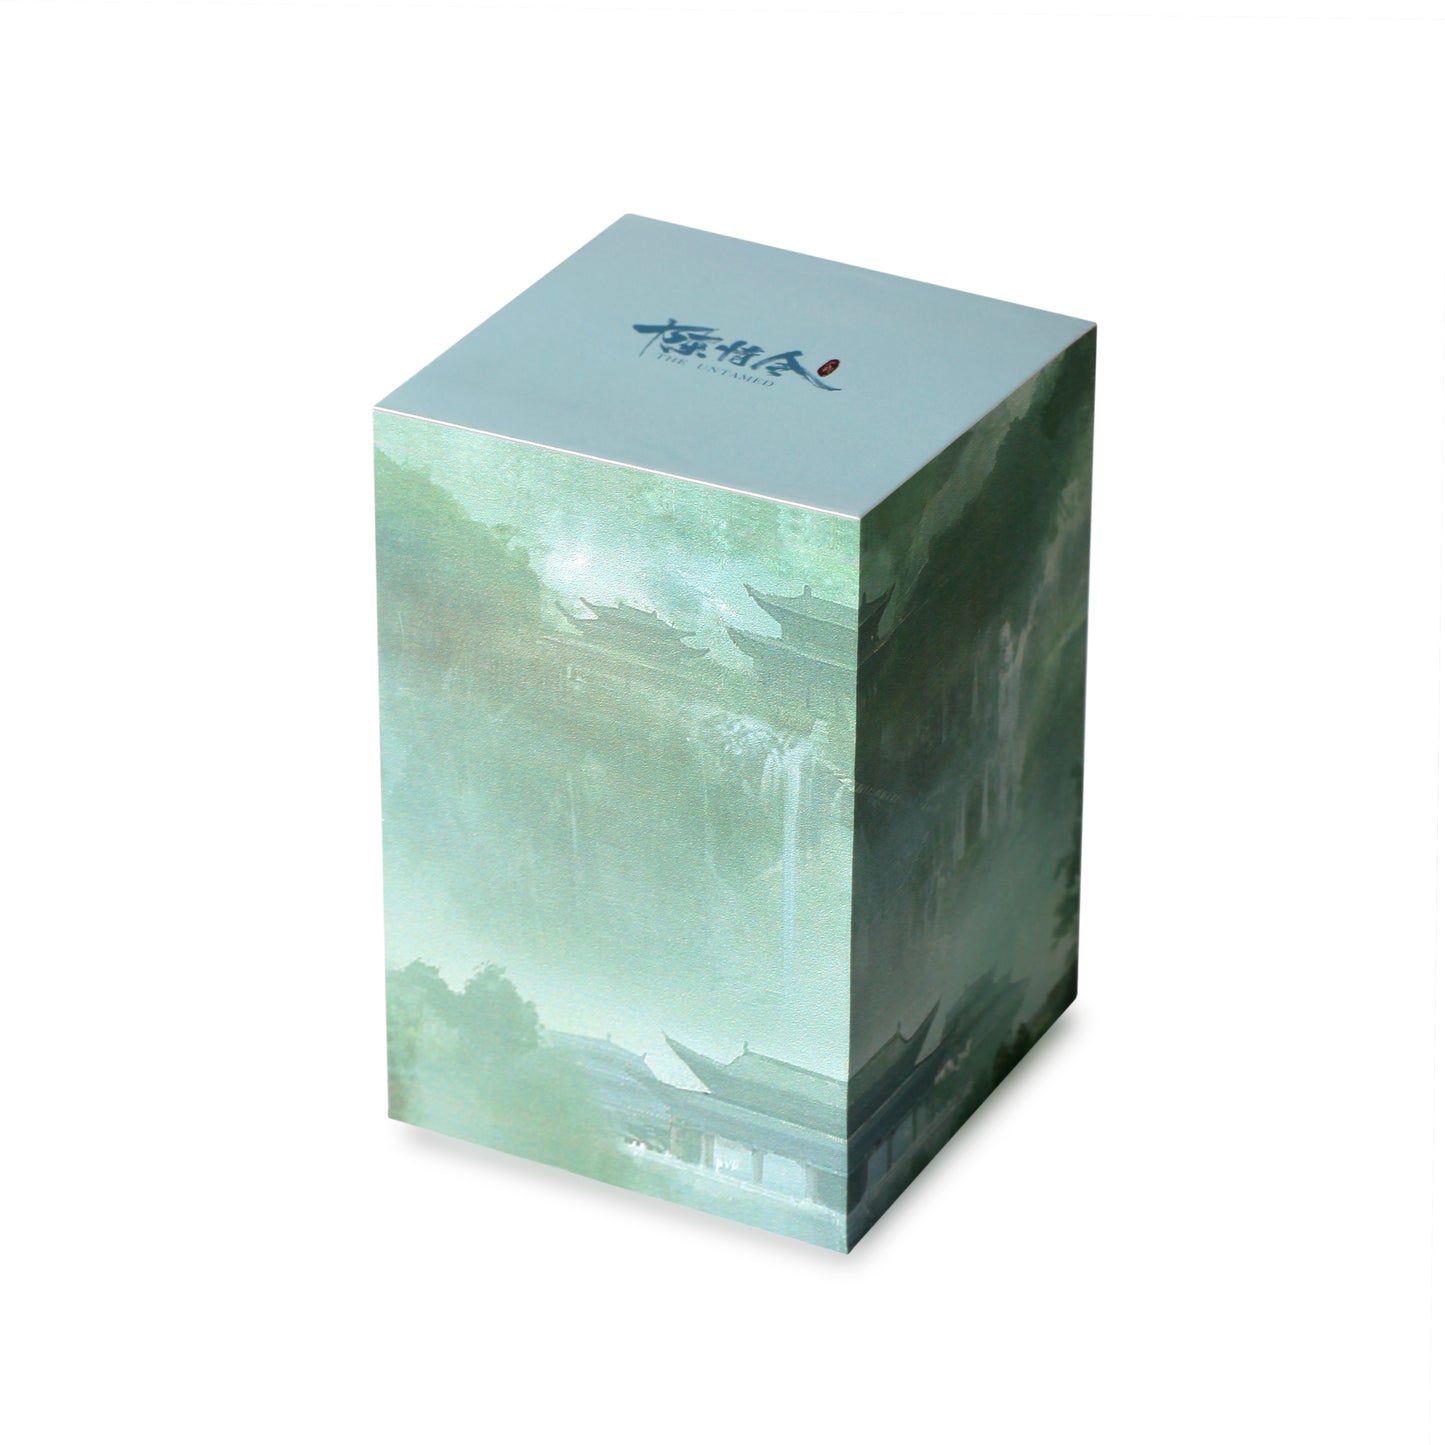 The Untamed One Year Anniversary Series Yun Shen Bu Zhi Chu Theme Non Sticky Cube Notepad